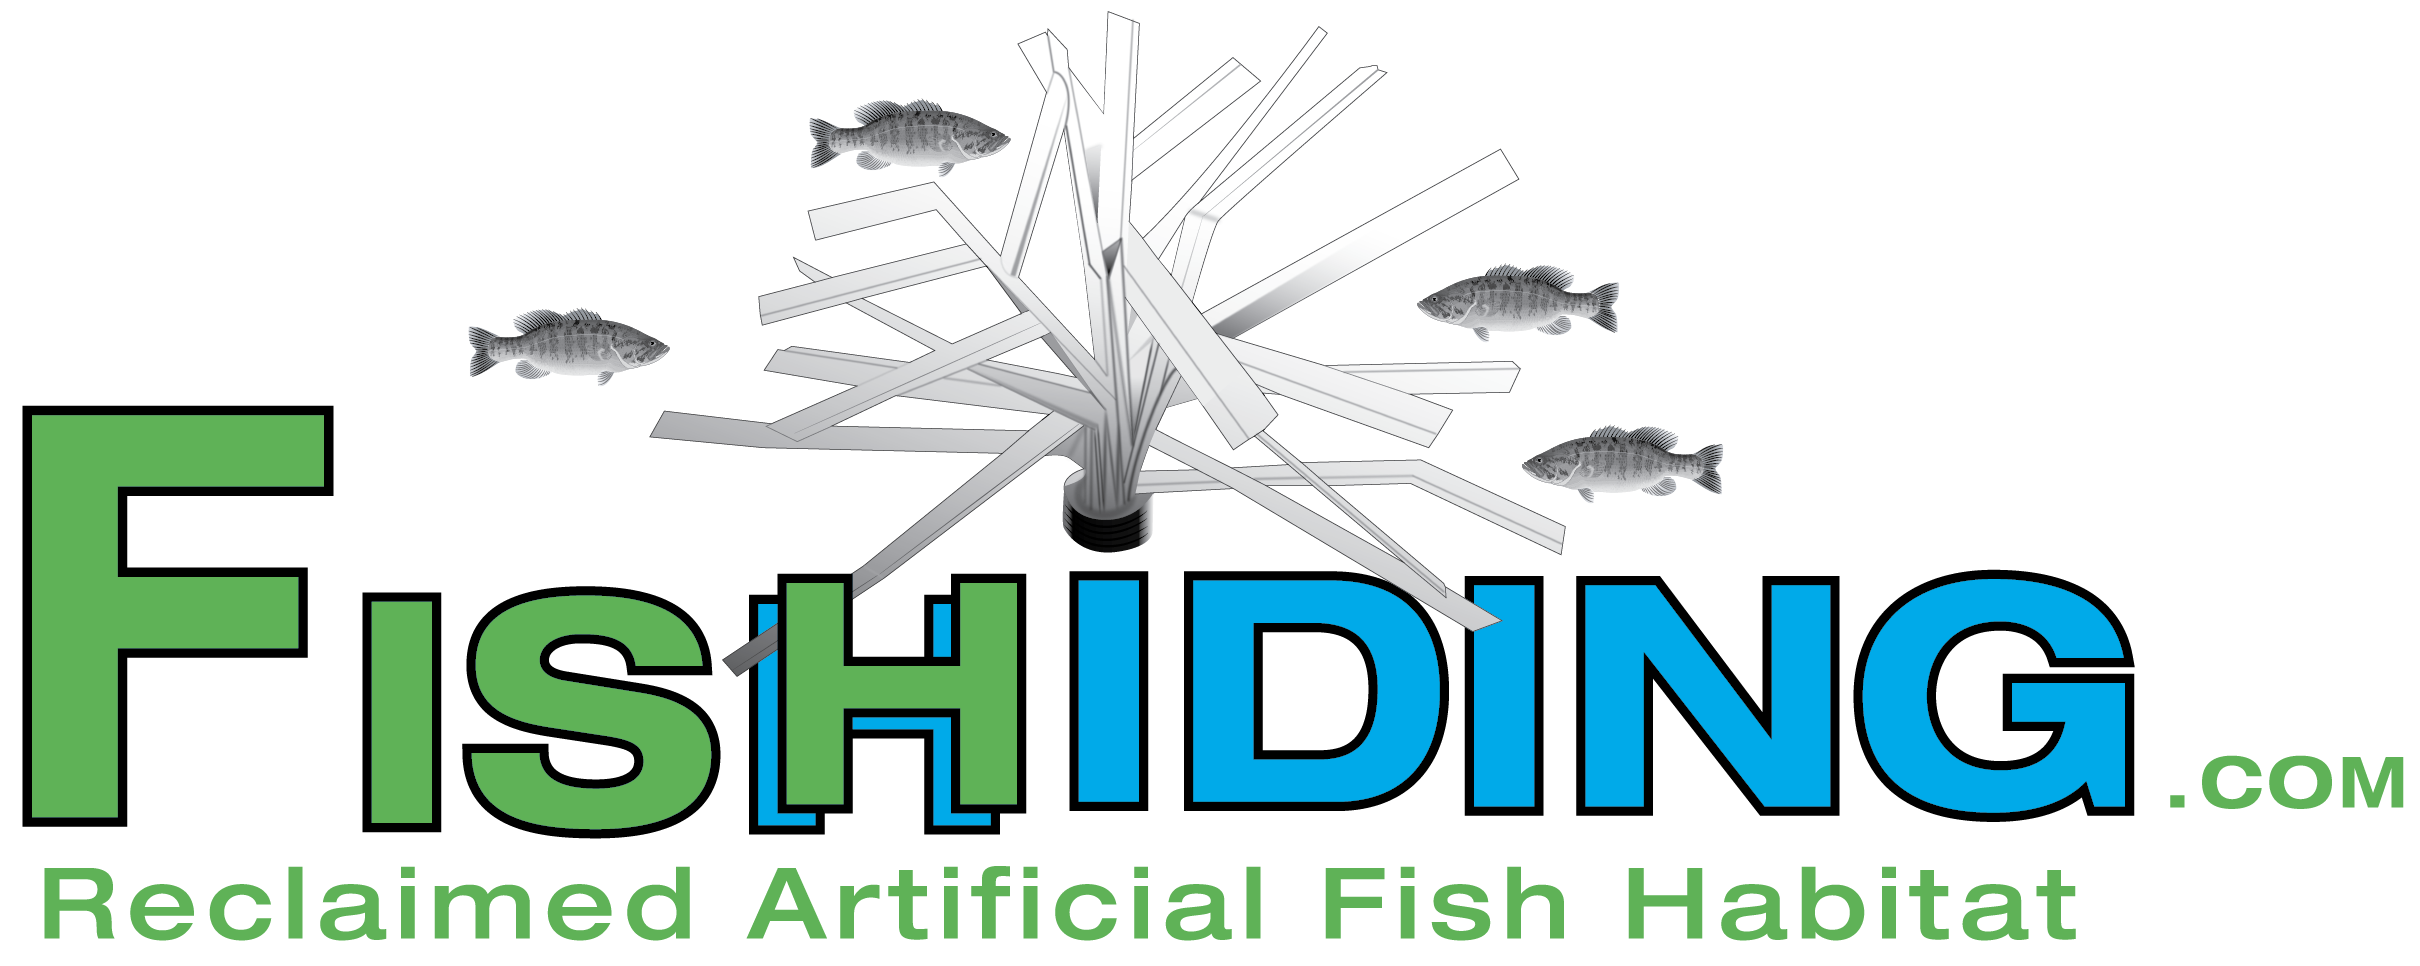 Fishiding Reclaimed Artificial Fish Habitat